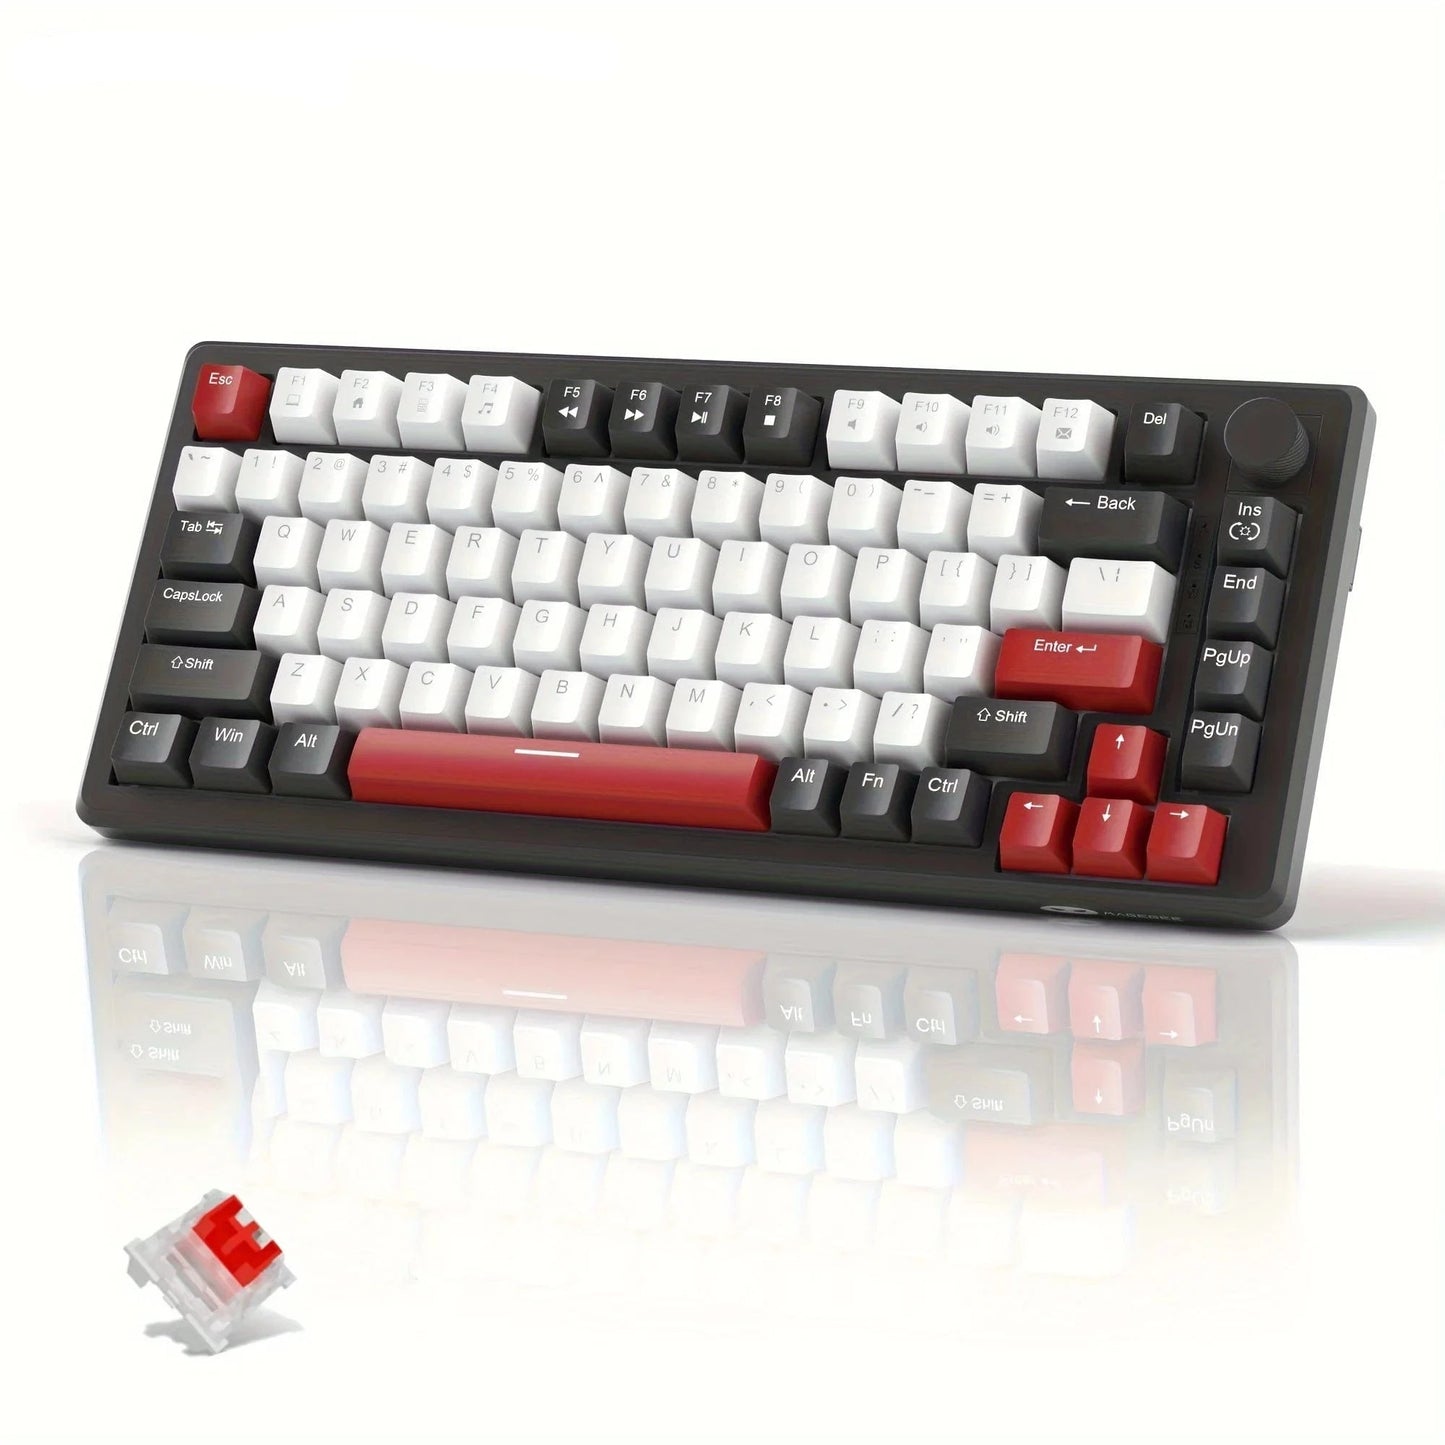 ÆLECTRONIX BlackWhite(Red) MageGee Mechanical Gaming Keyboard